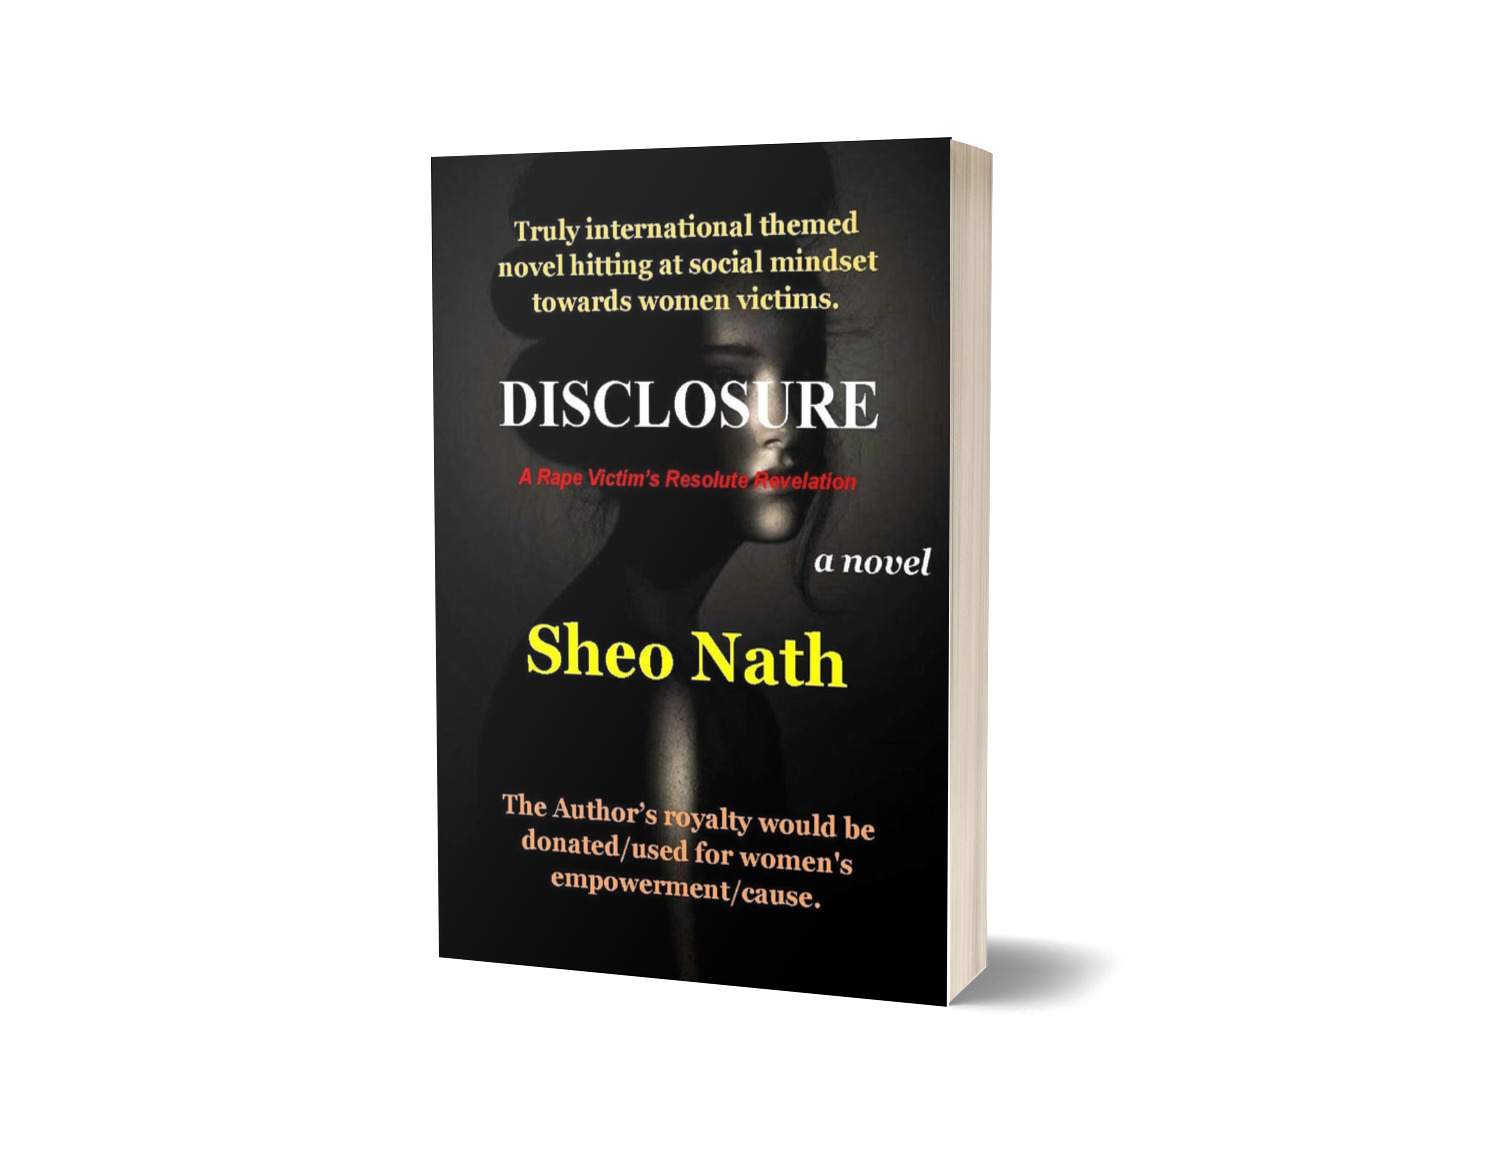 disclosure by sheo nath